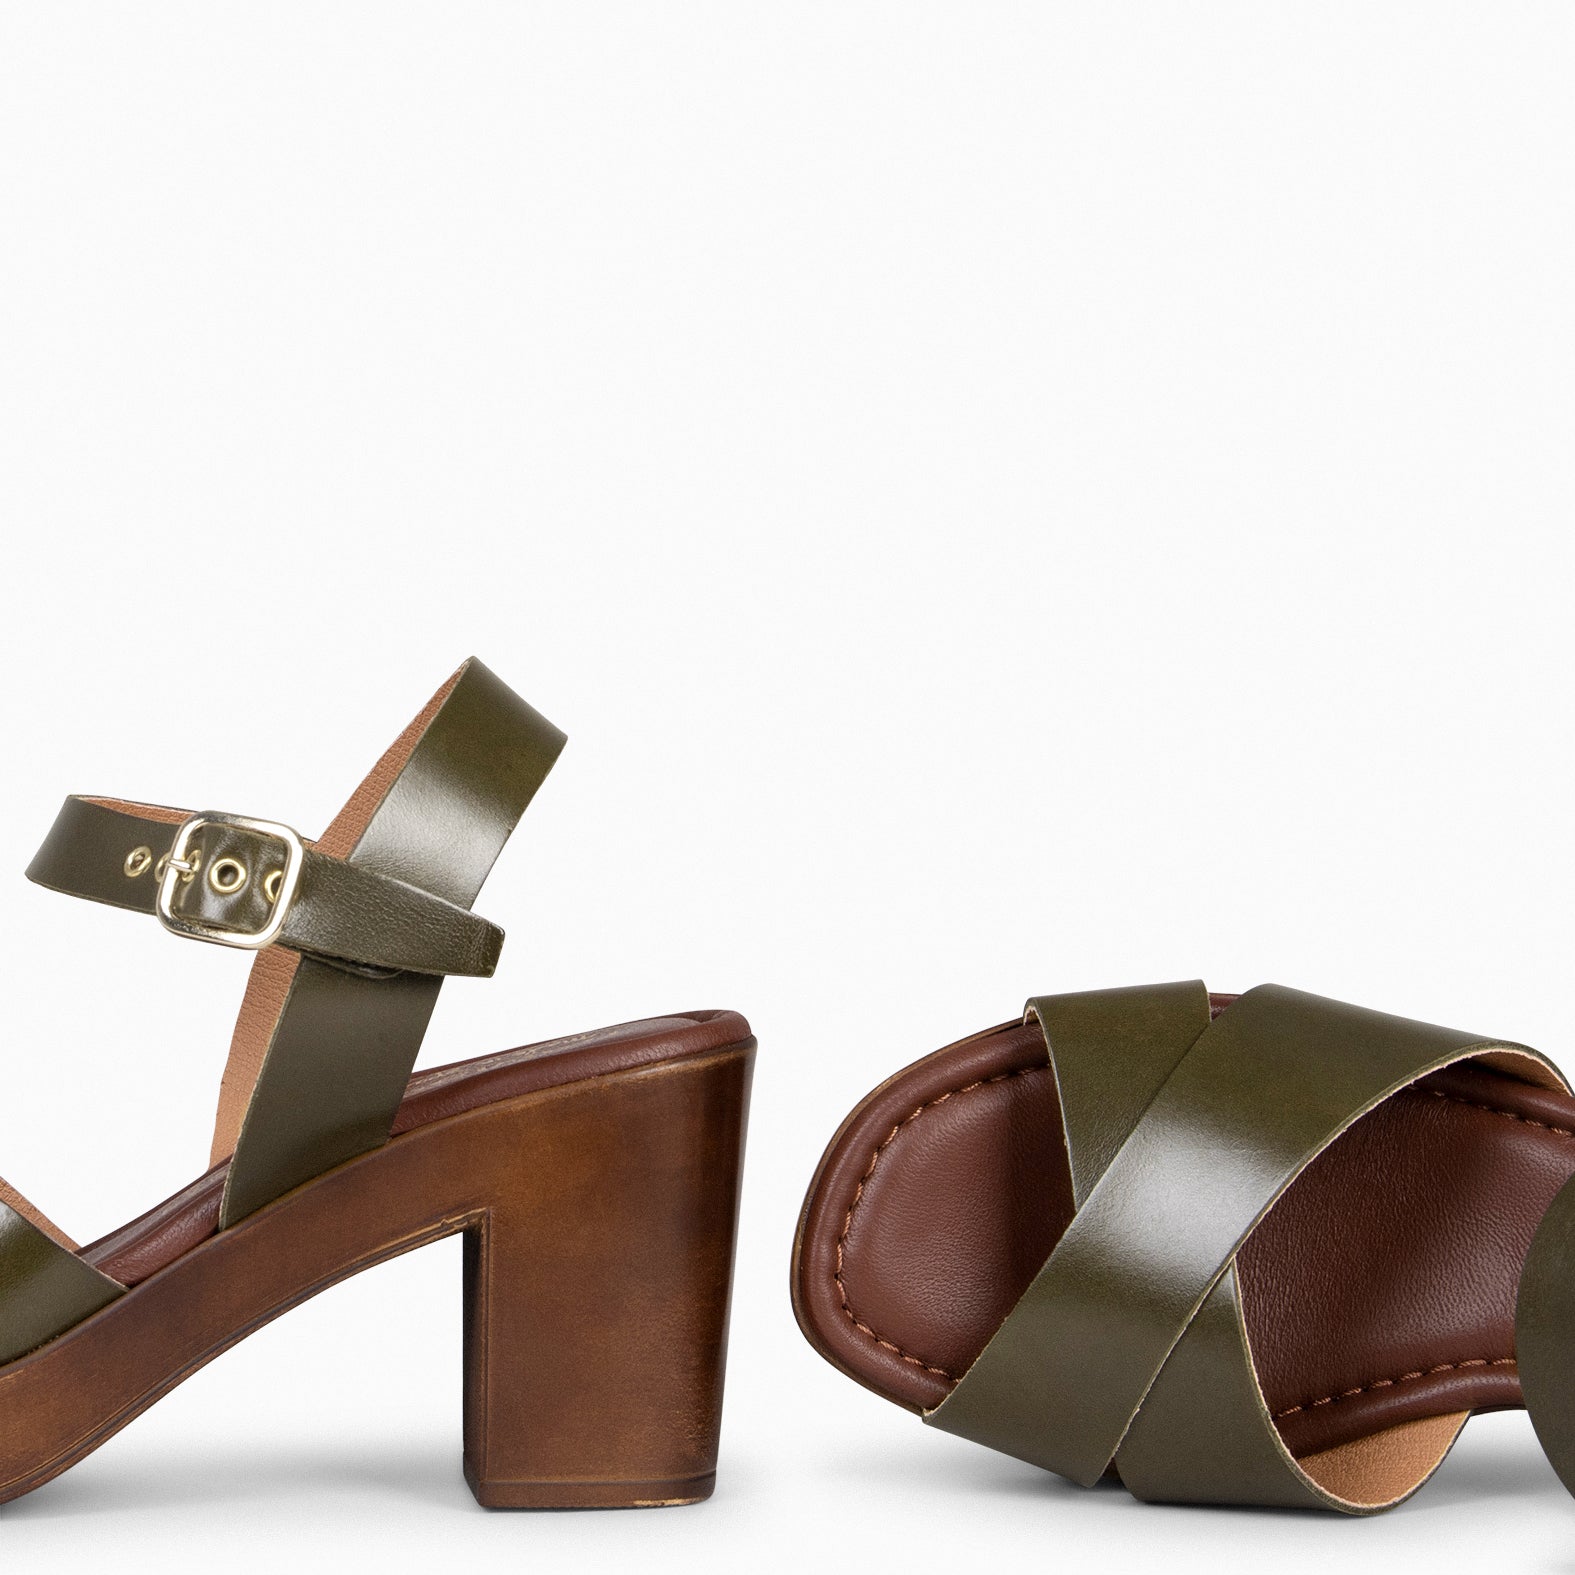 TAVIRA – KHAKI wide-heeled sandal